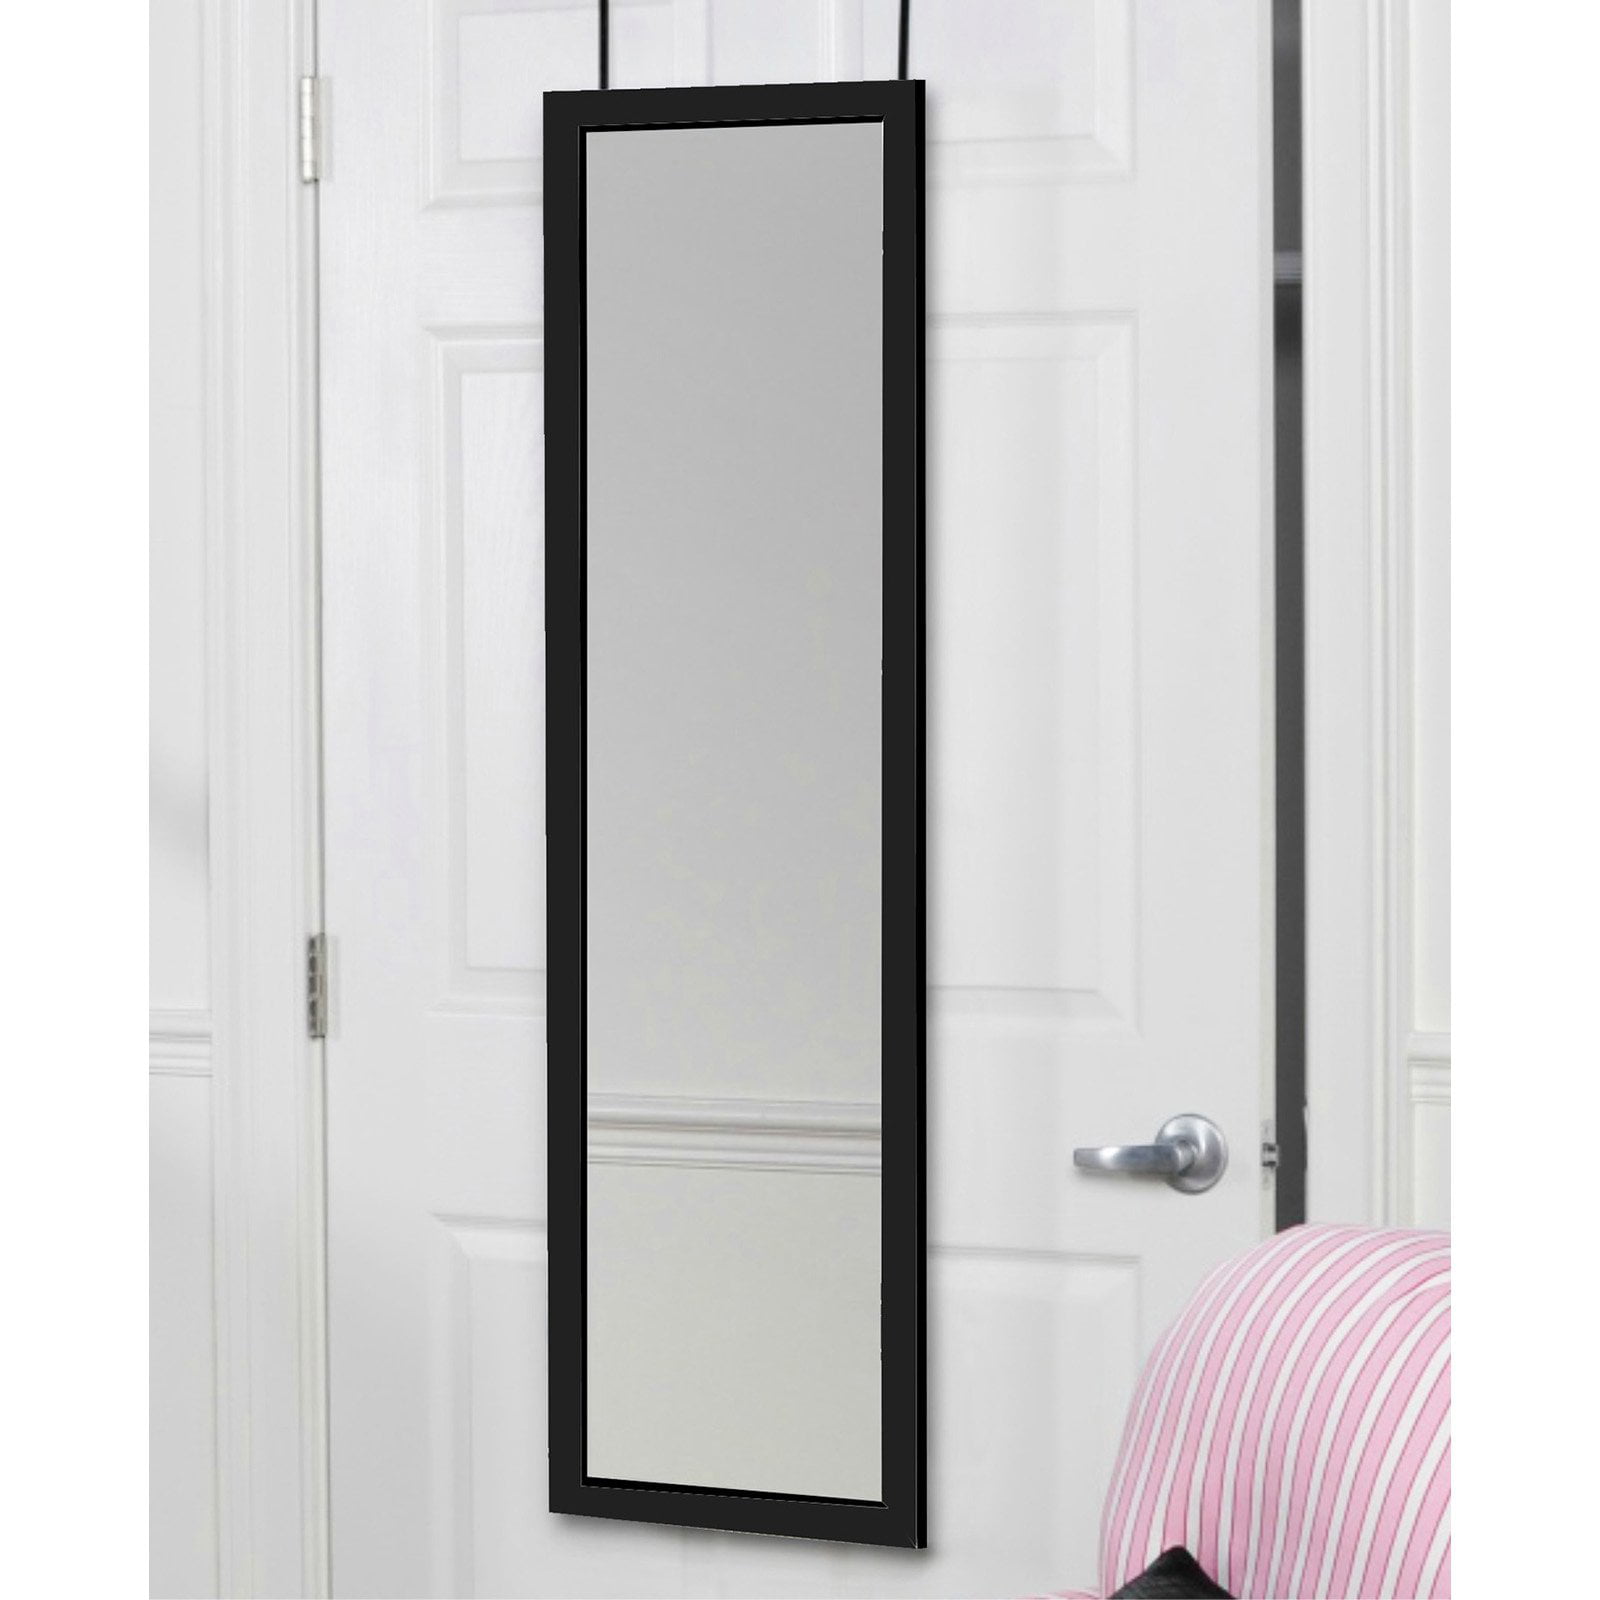 Mirrotek Over the Door / Wall Mounted Full Length Dressing Mirror 